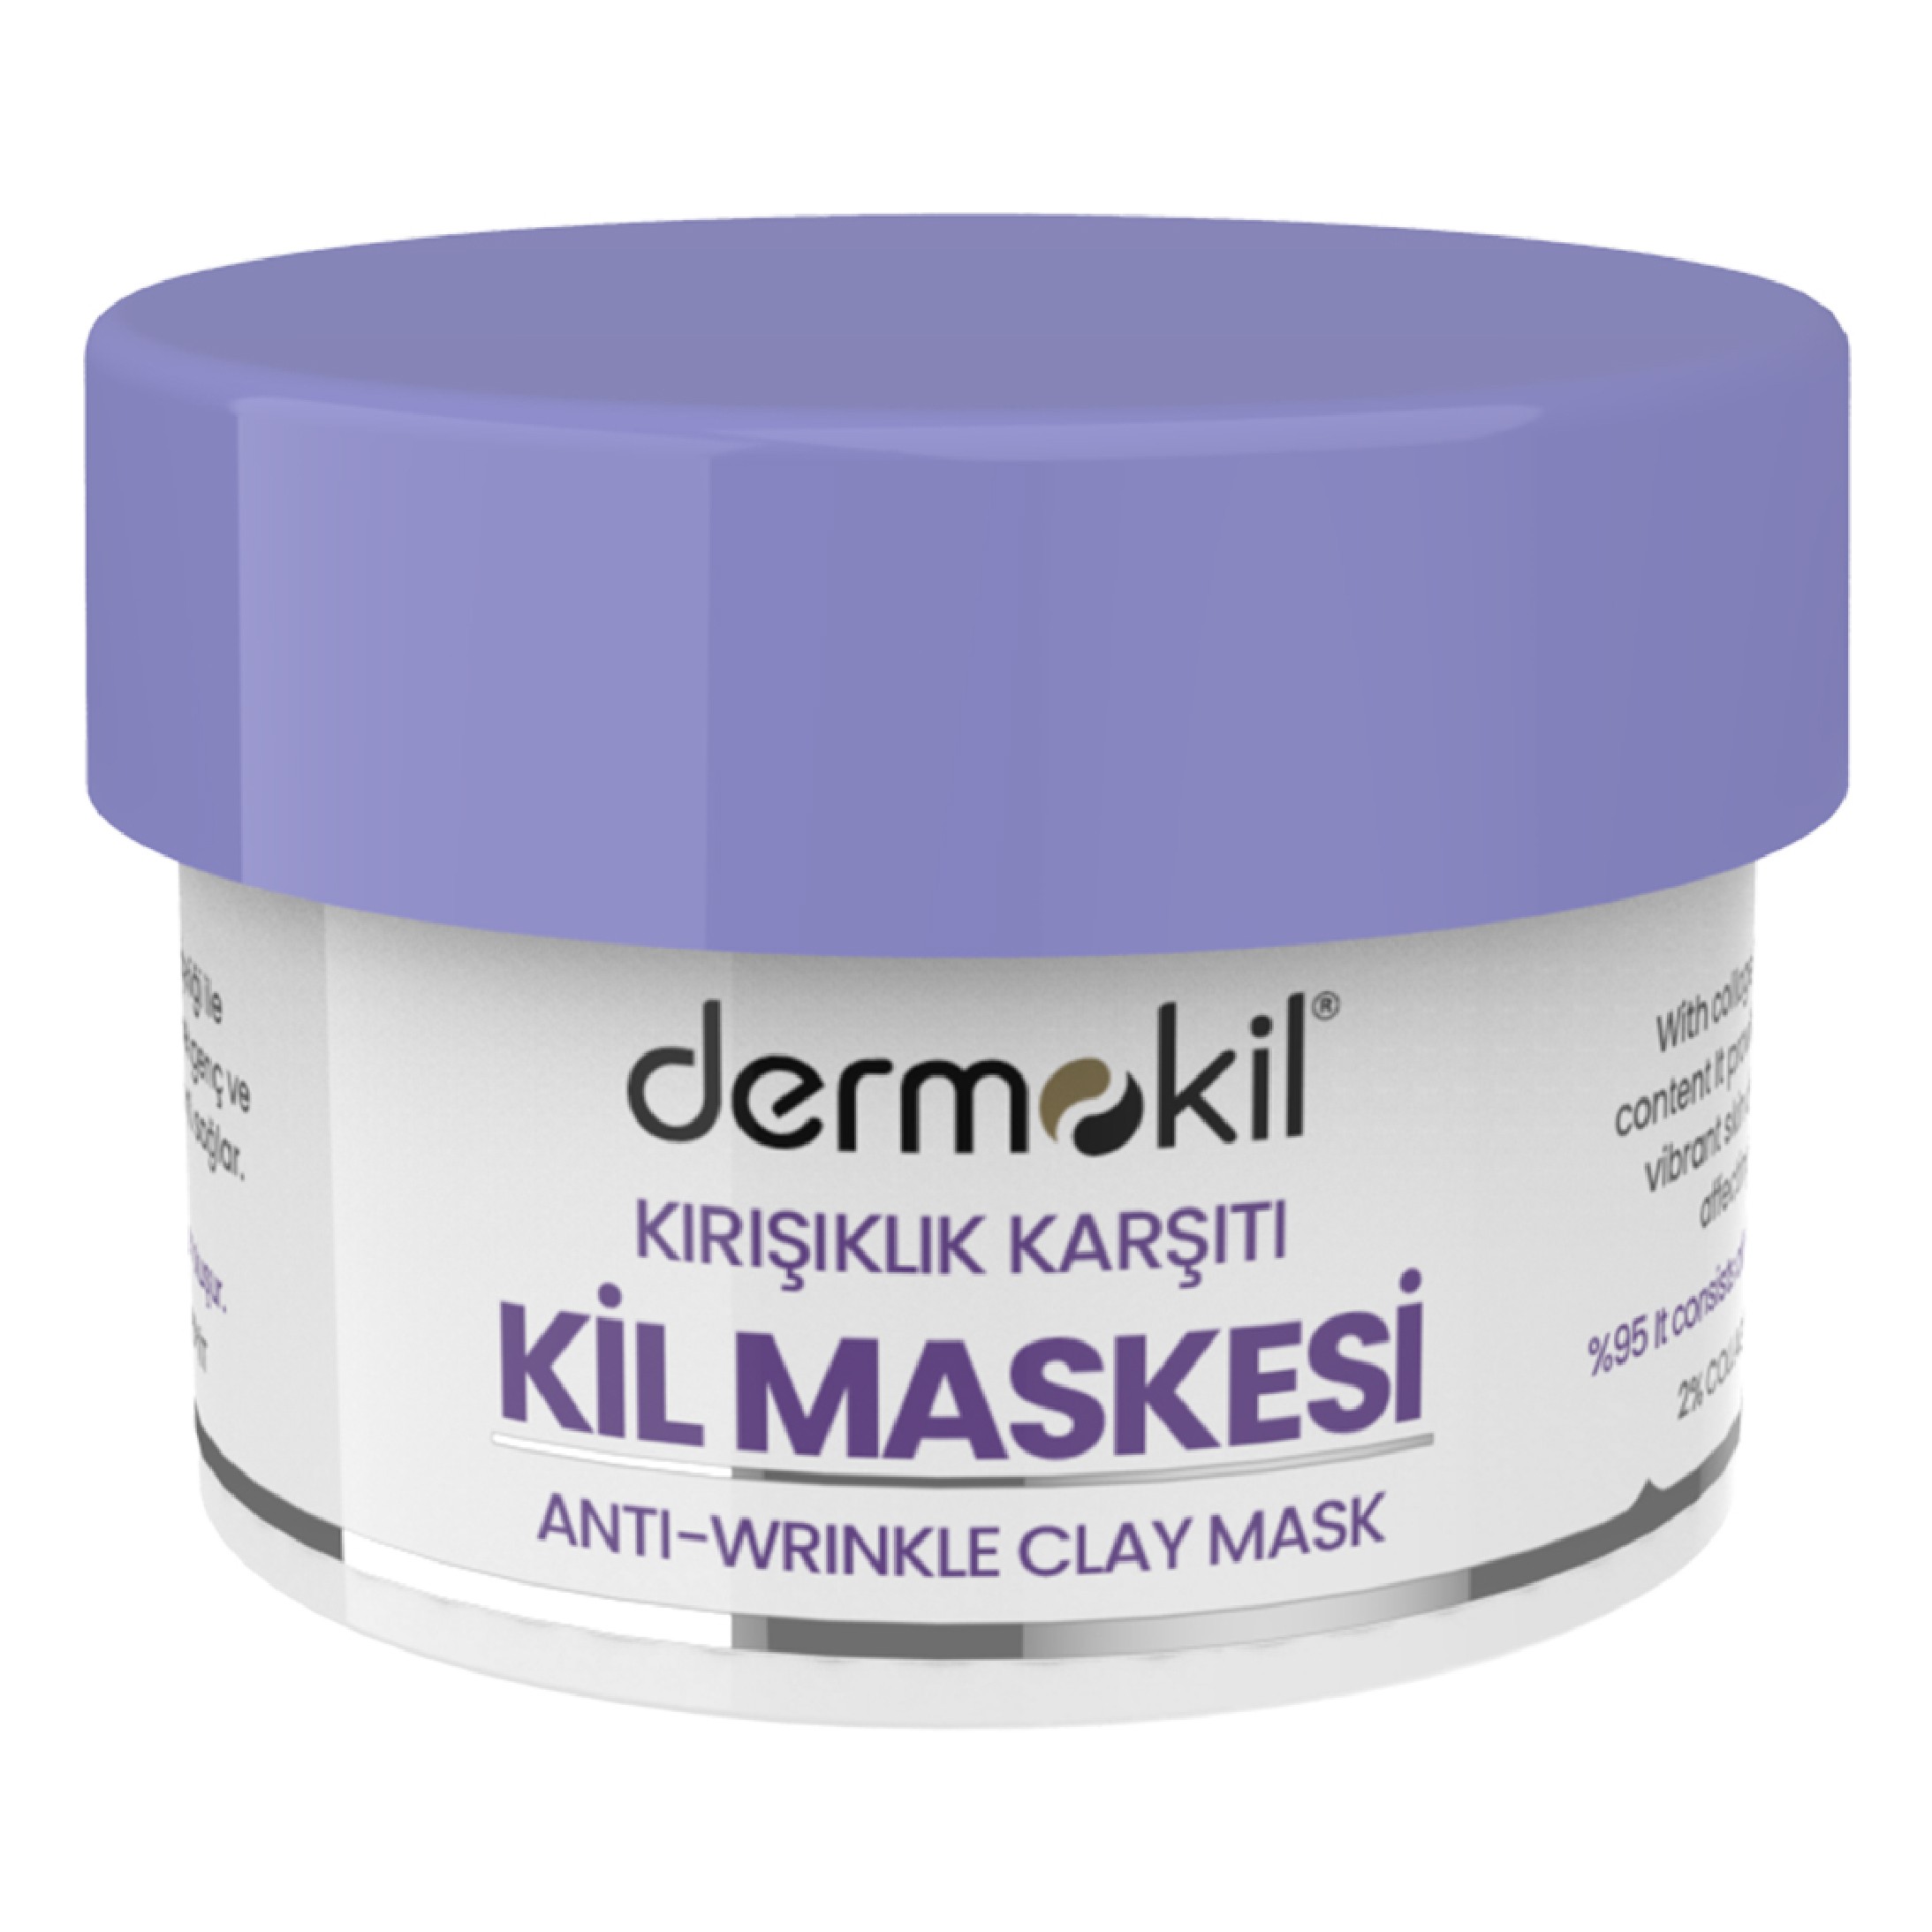 Dermokil anti -wrinkle clay mask 50 ml